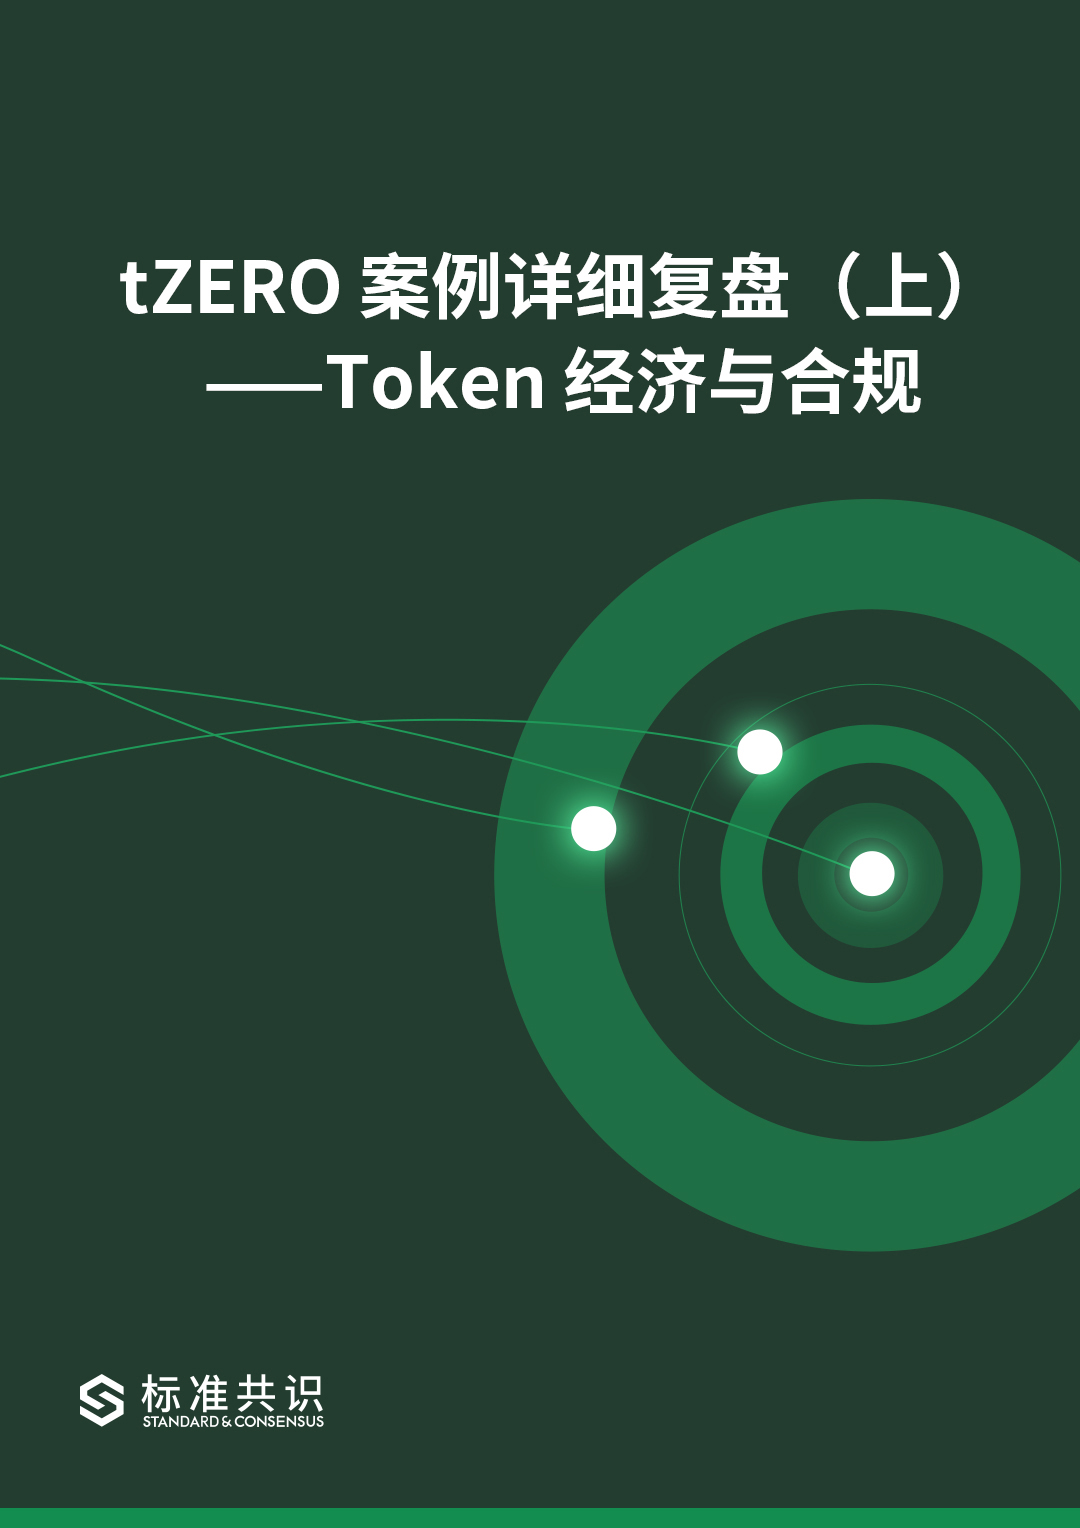 tZERO 案例详细复盘（上）——Token 经济与合规｜标准共识配图(2)